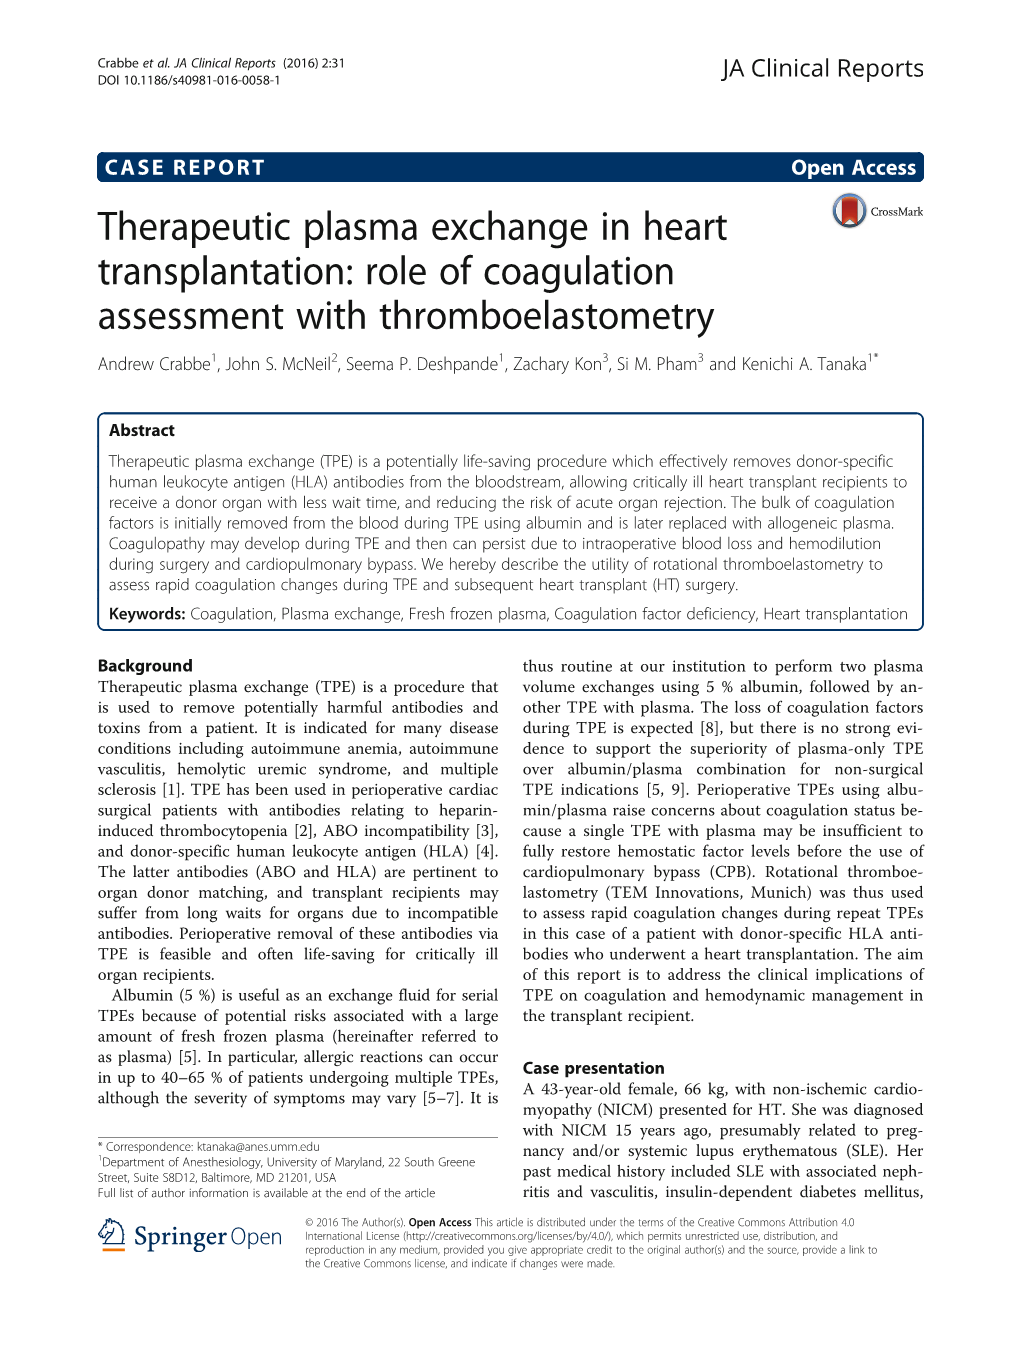 Therapeutic Plasma Exchange in Heart Transplantation: Role of Coagulation Assessment with Thromboelastometry Andrew Crabbe1, John S